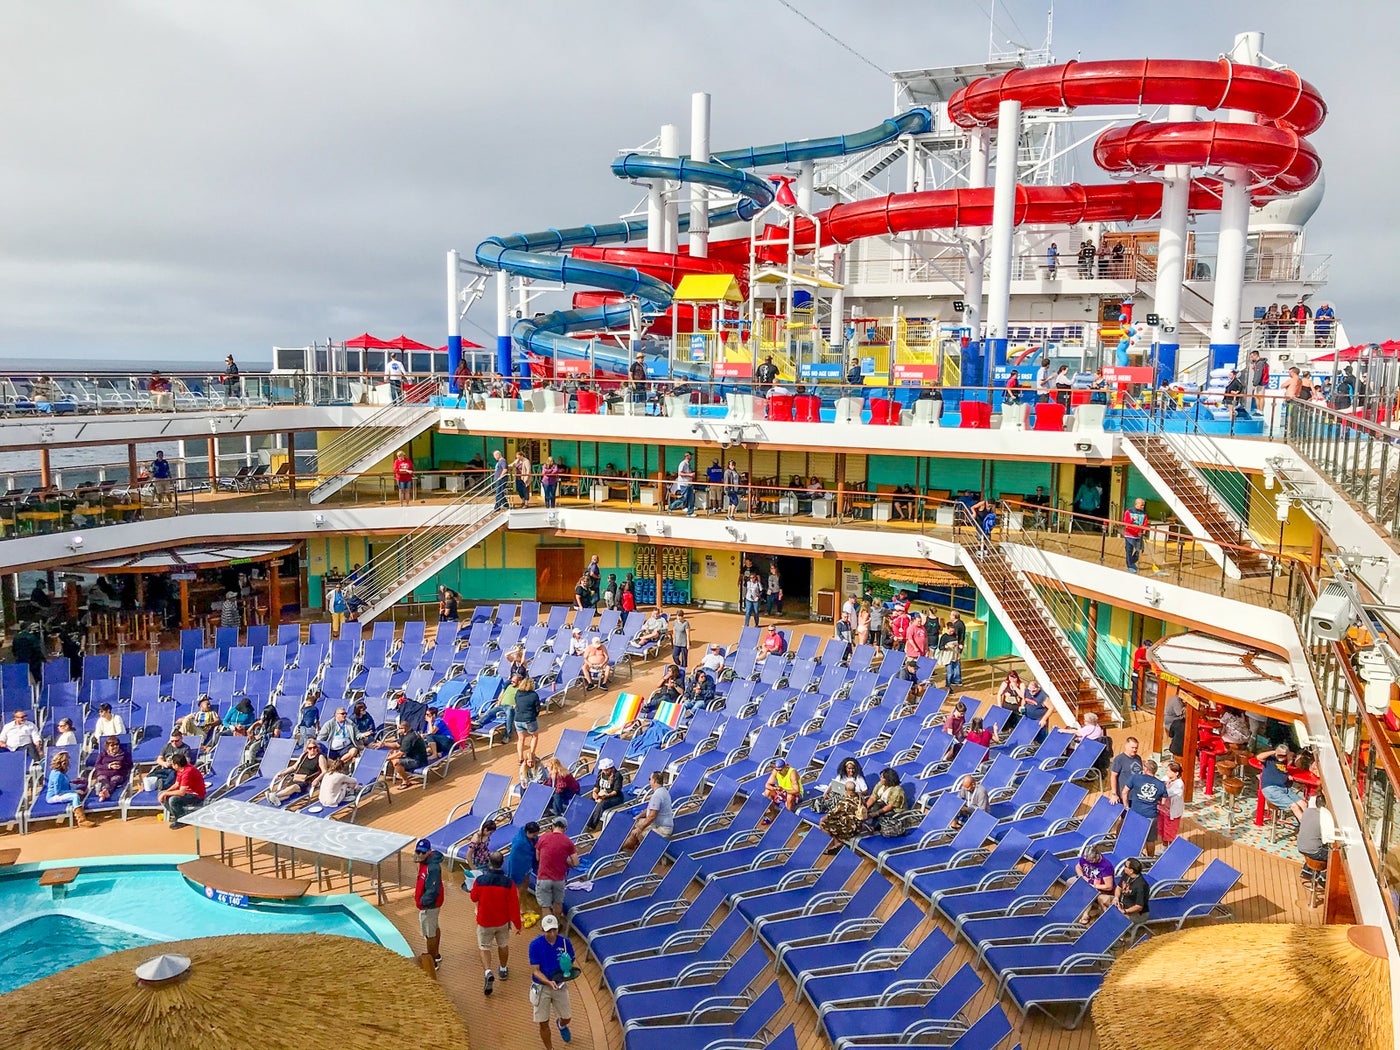 carnival festival cruise ship